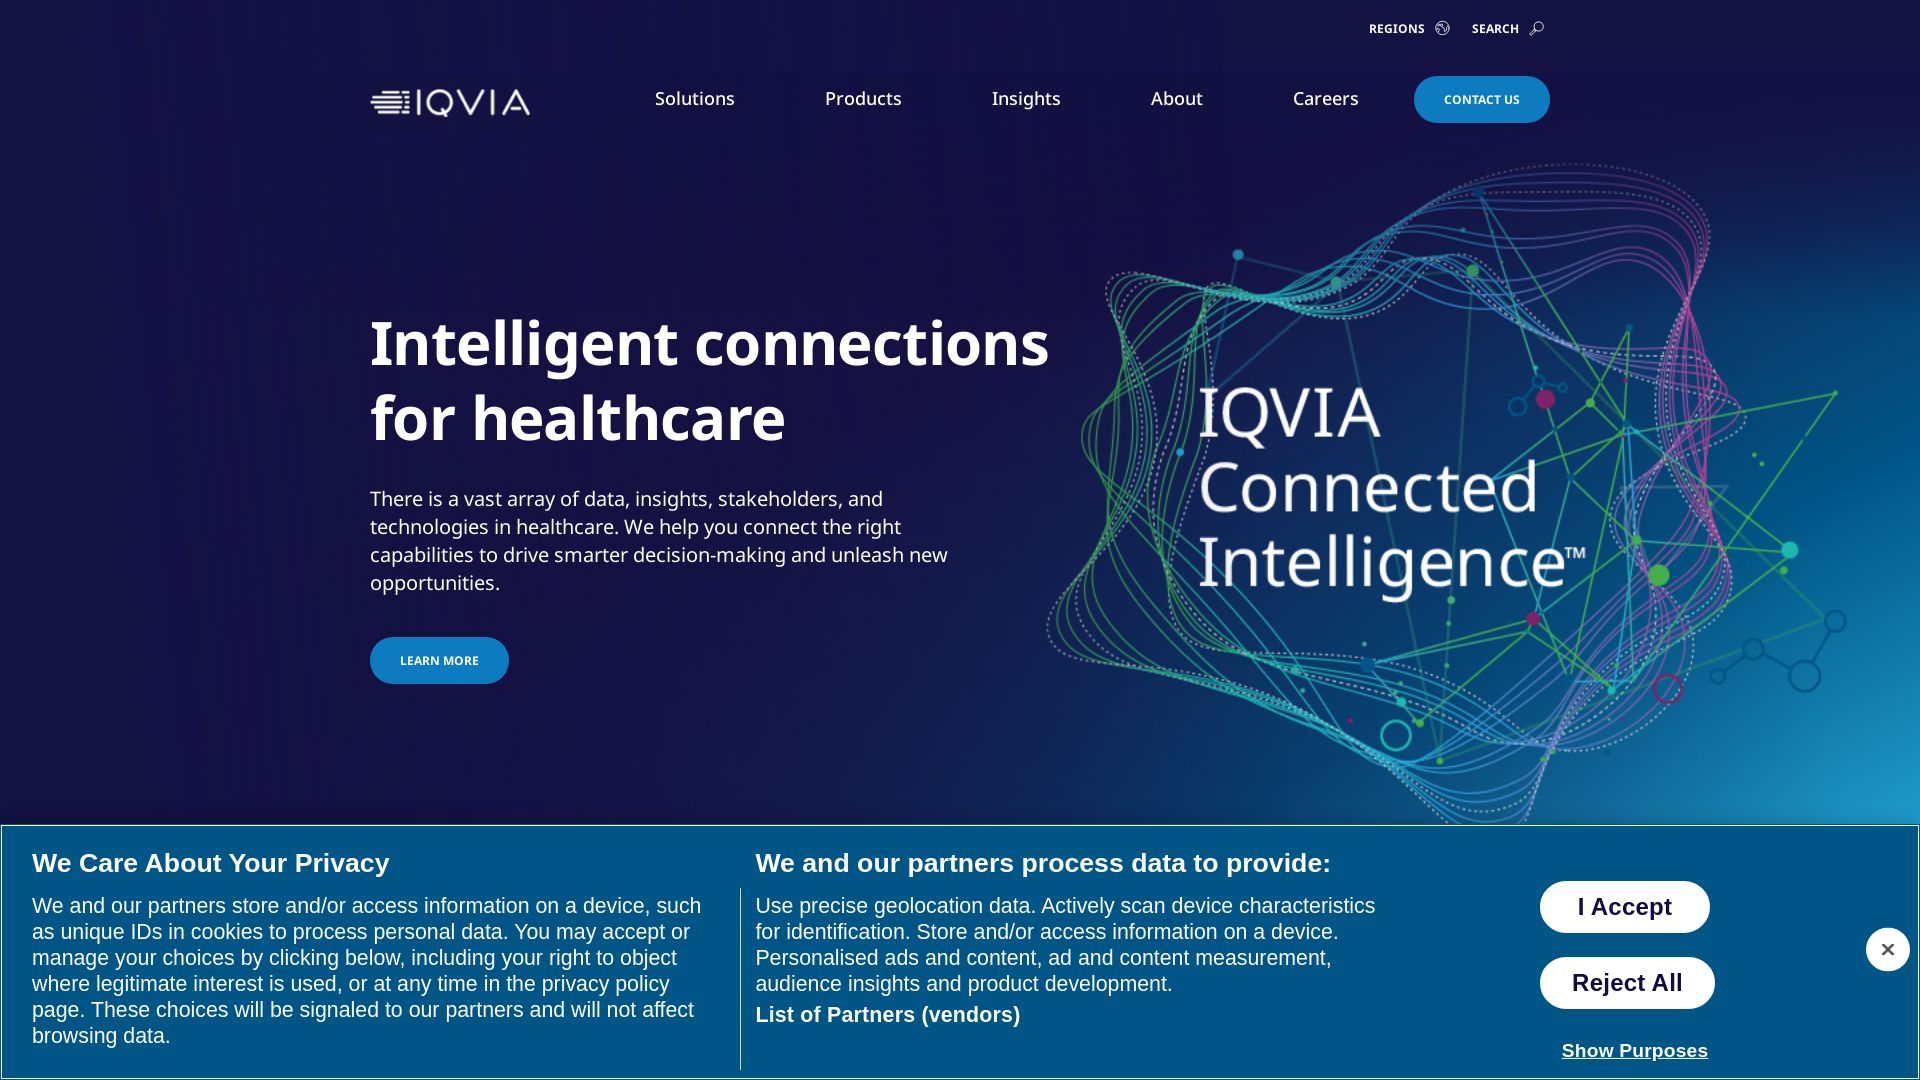 вебсайт iqvia.com Є   ONLINE